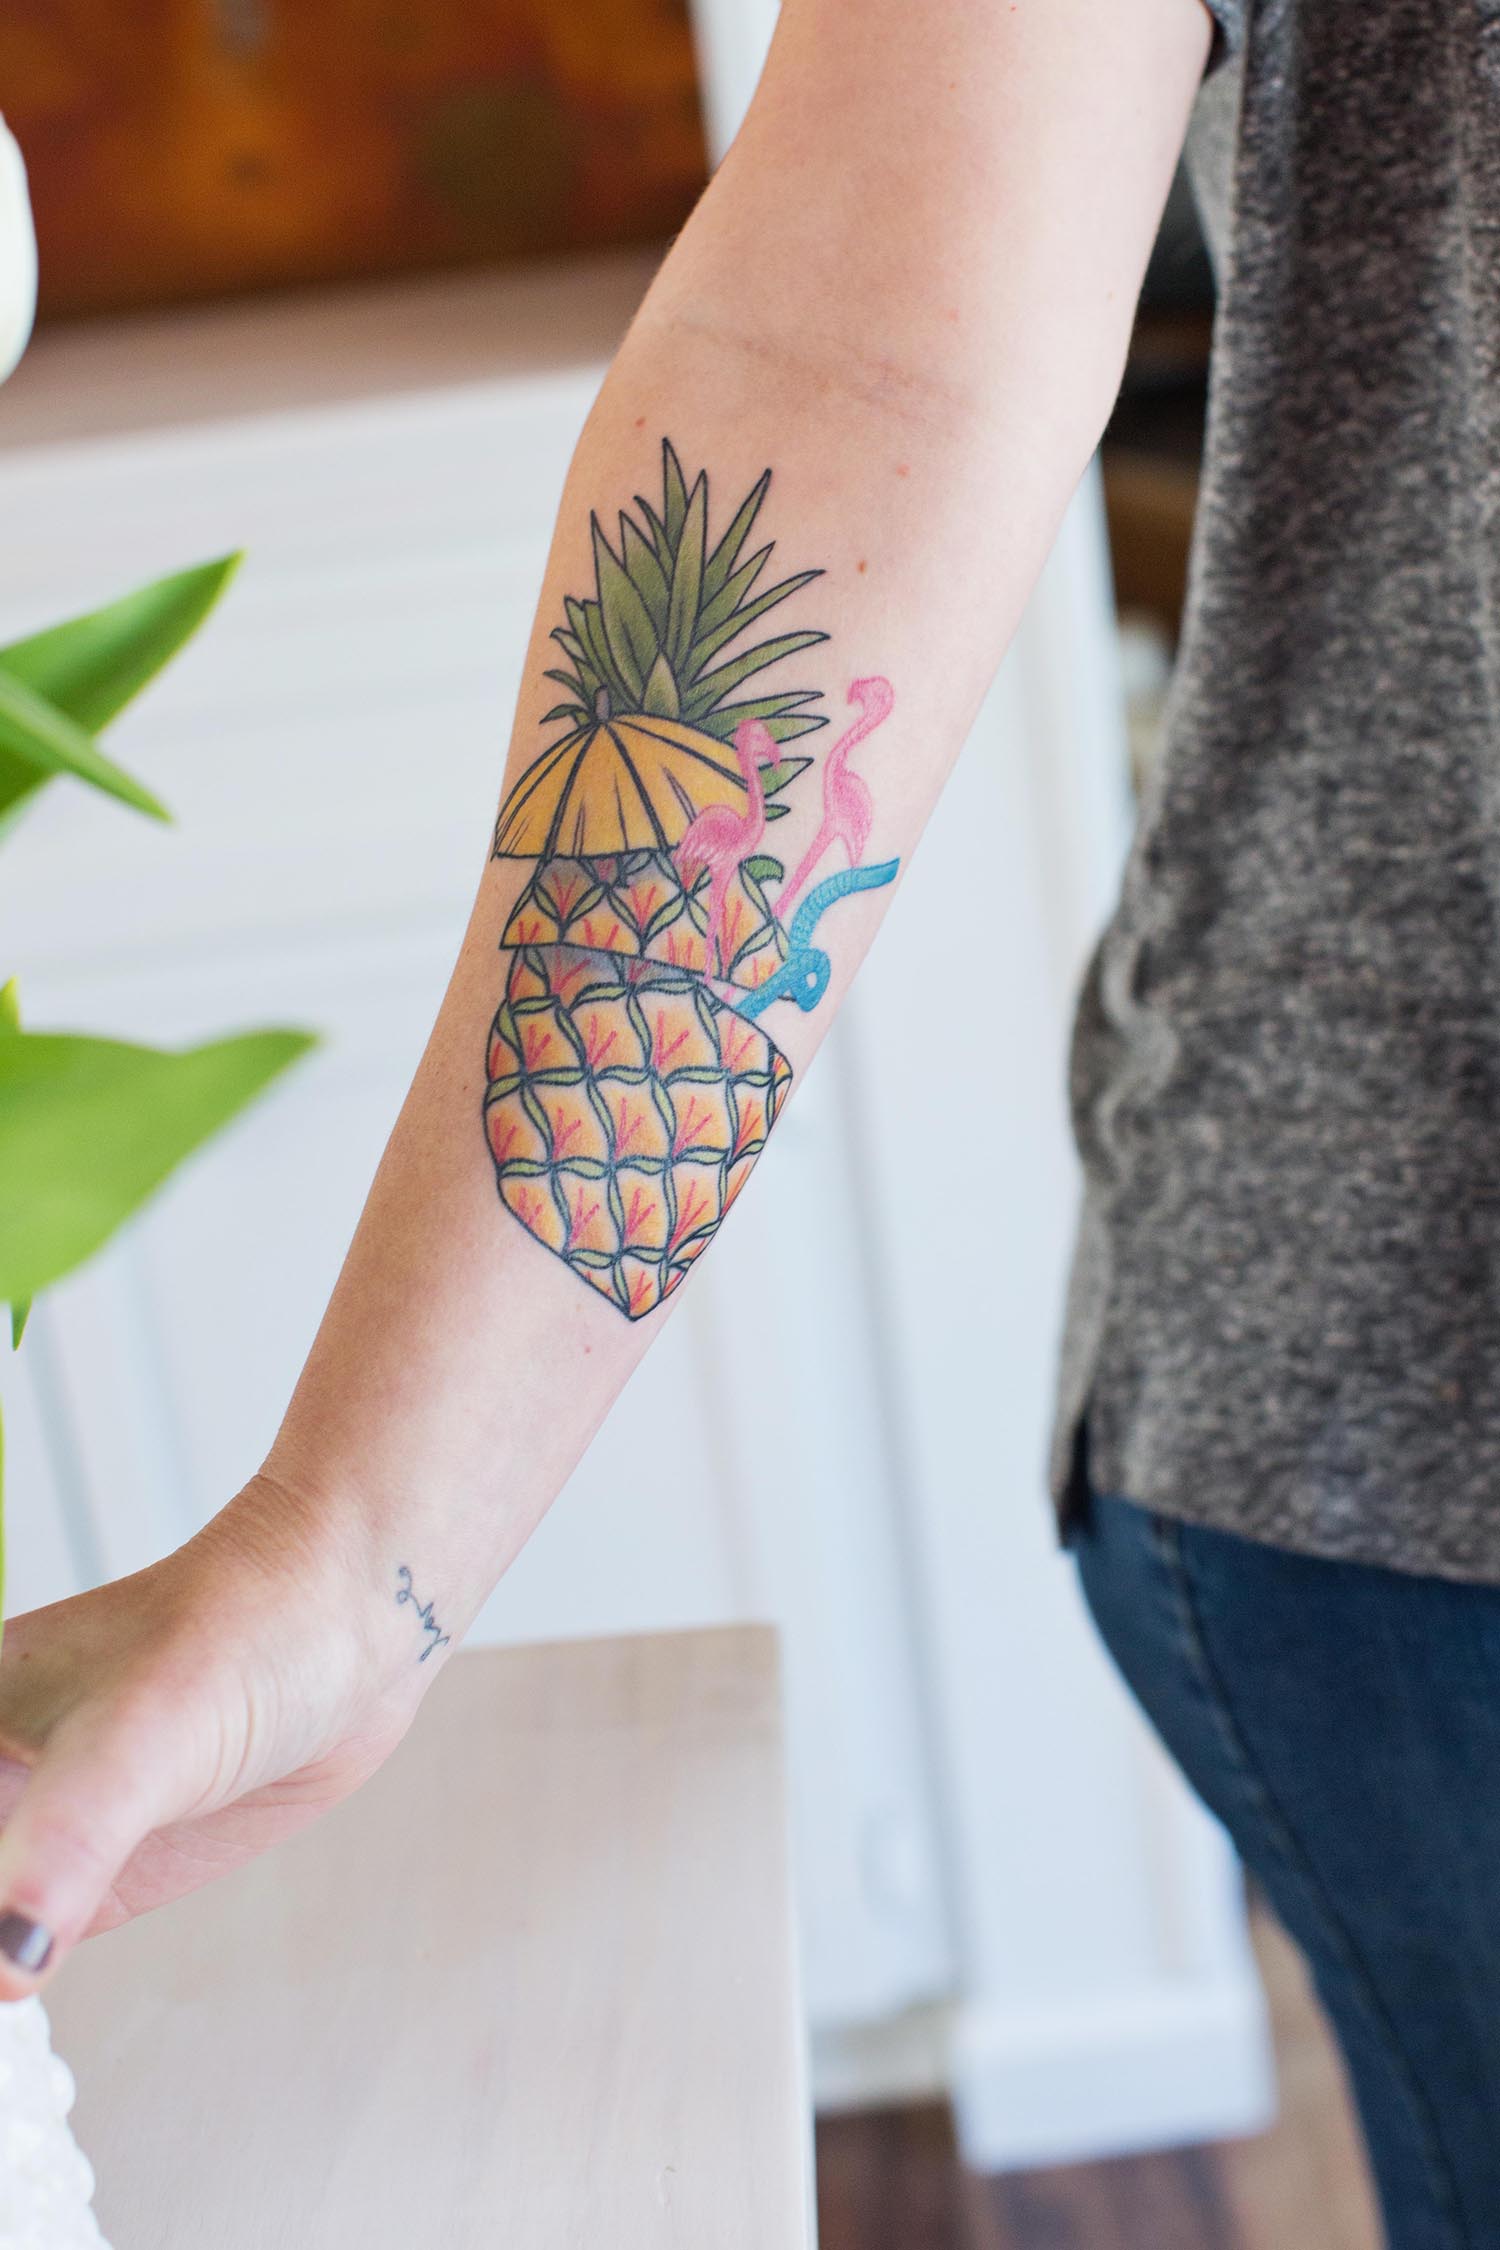 Pineapple tattoo